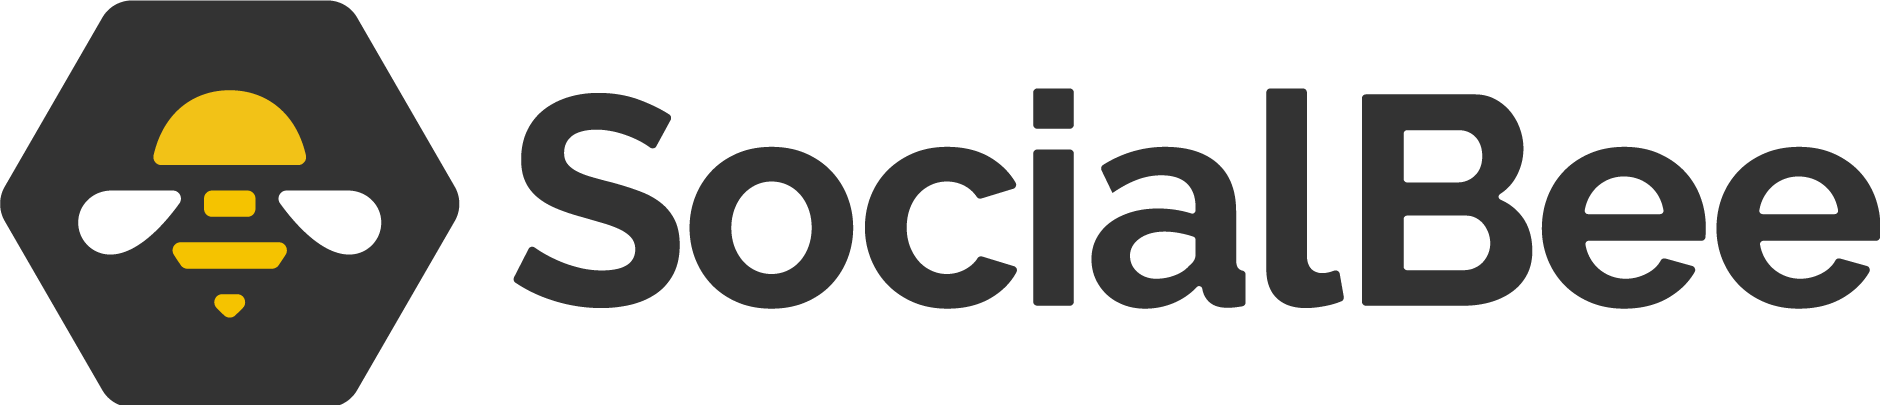 SocialBee-logo-whitebackground.png